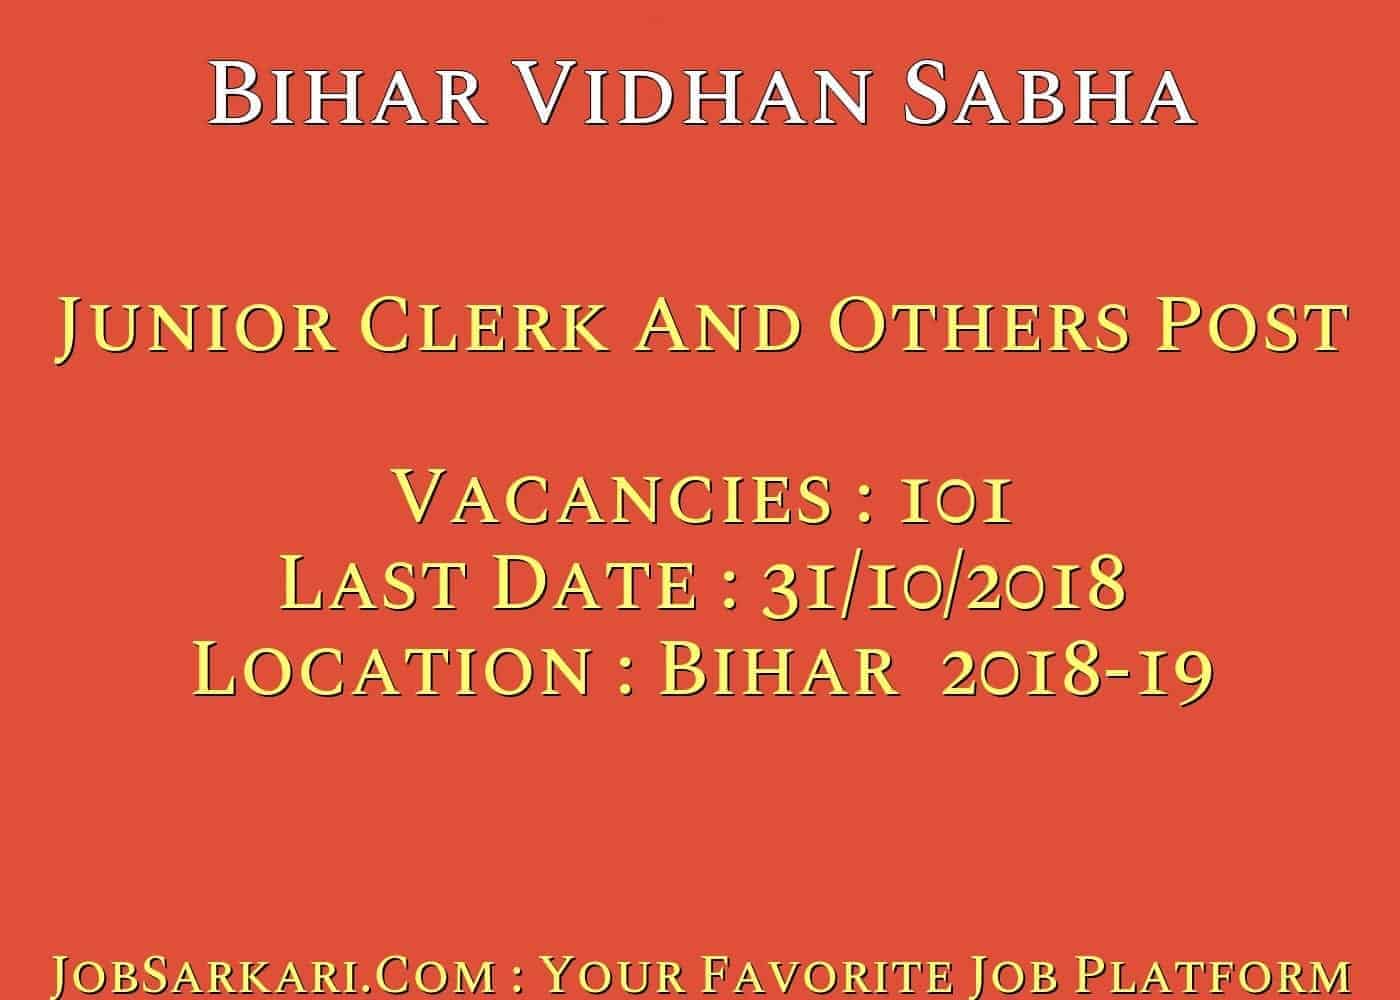 Bihar Vidhan Sabha Recruitment 2018 For Junior Clerk And Others Post Govt Job Mains